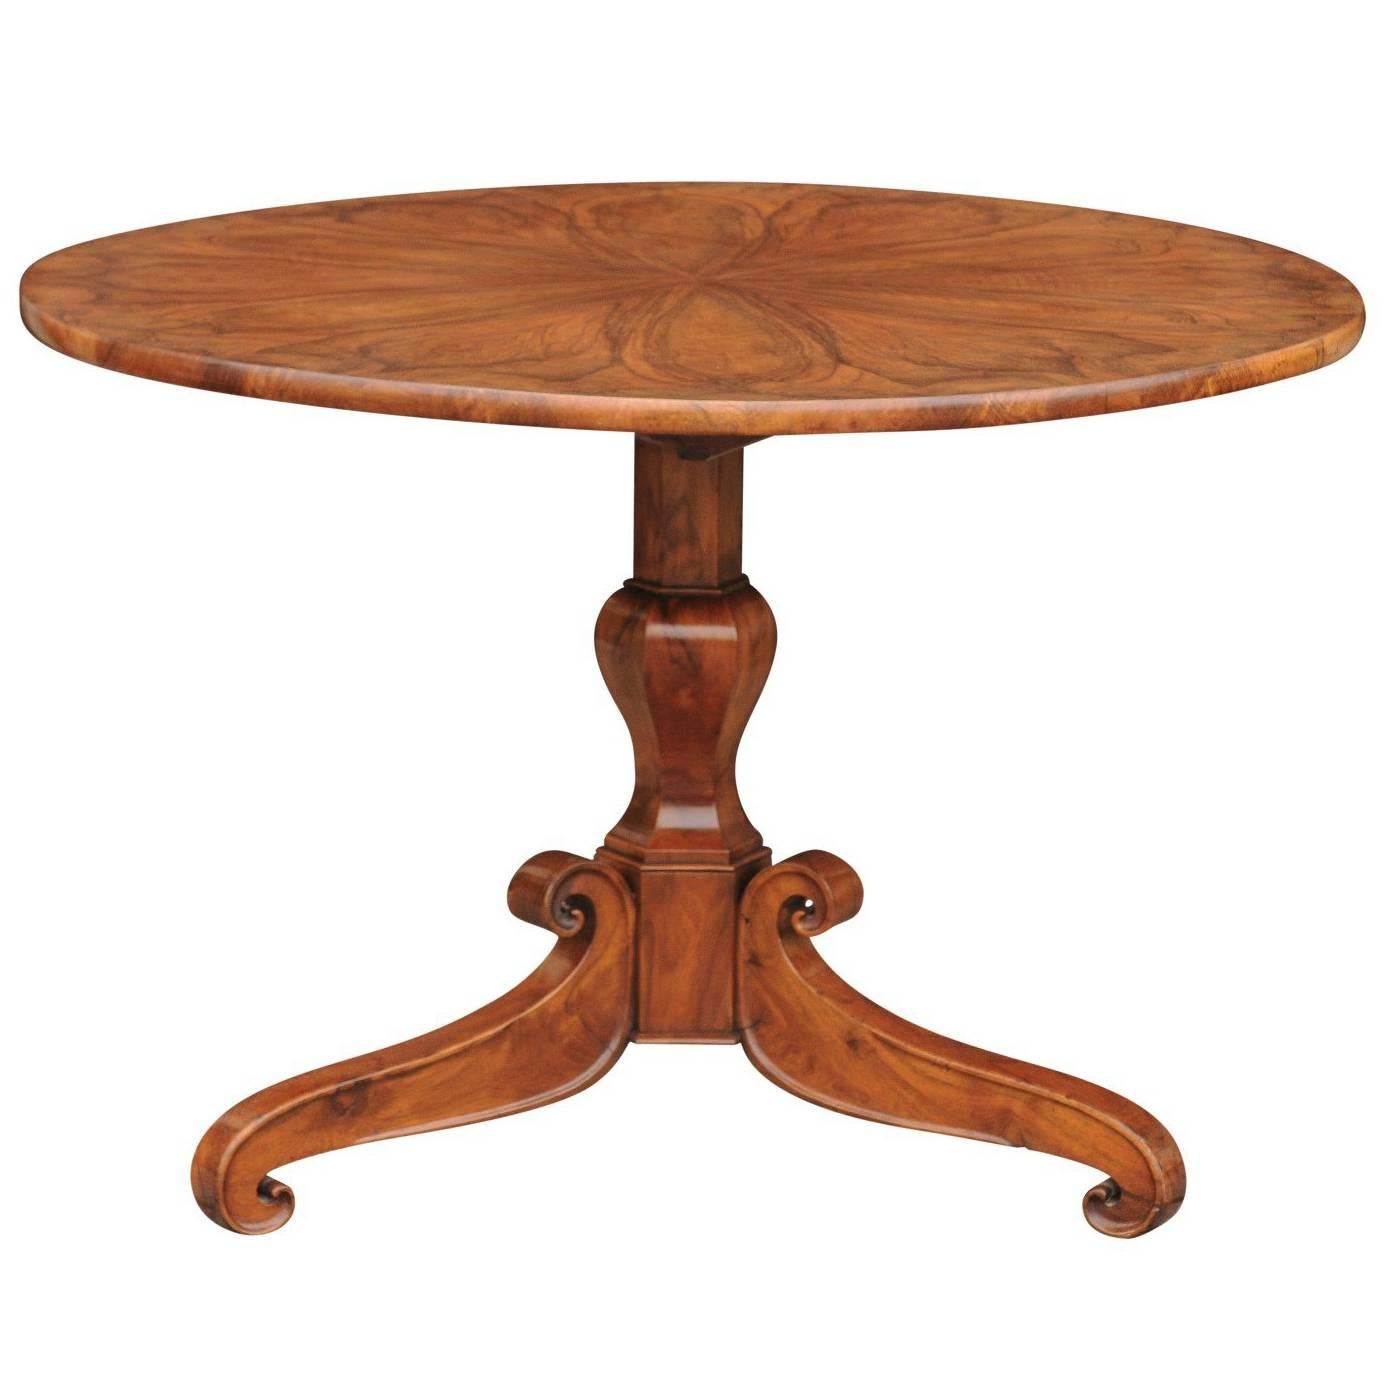 Austrian Biedermeier Burl Walnut Round Pedestal Table from the Mid-19th Century